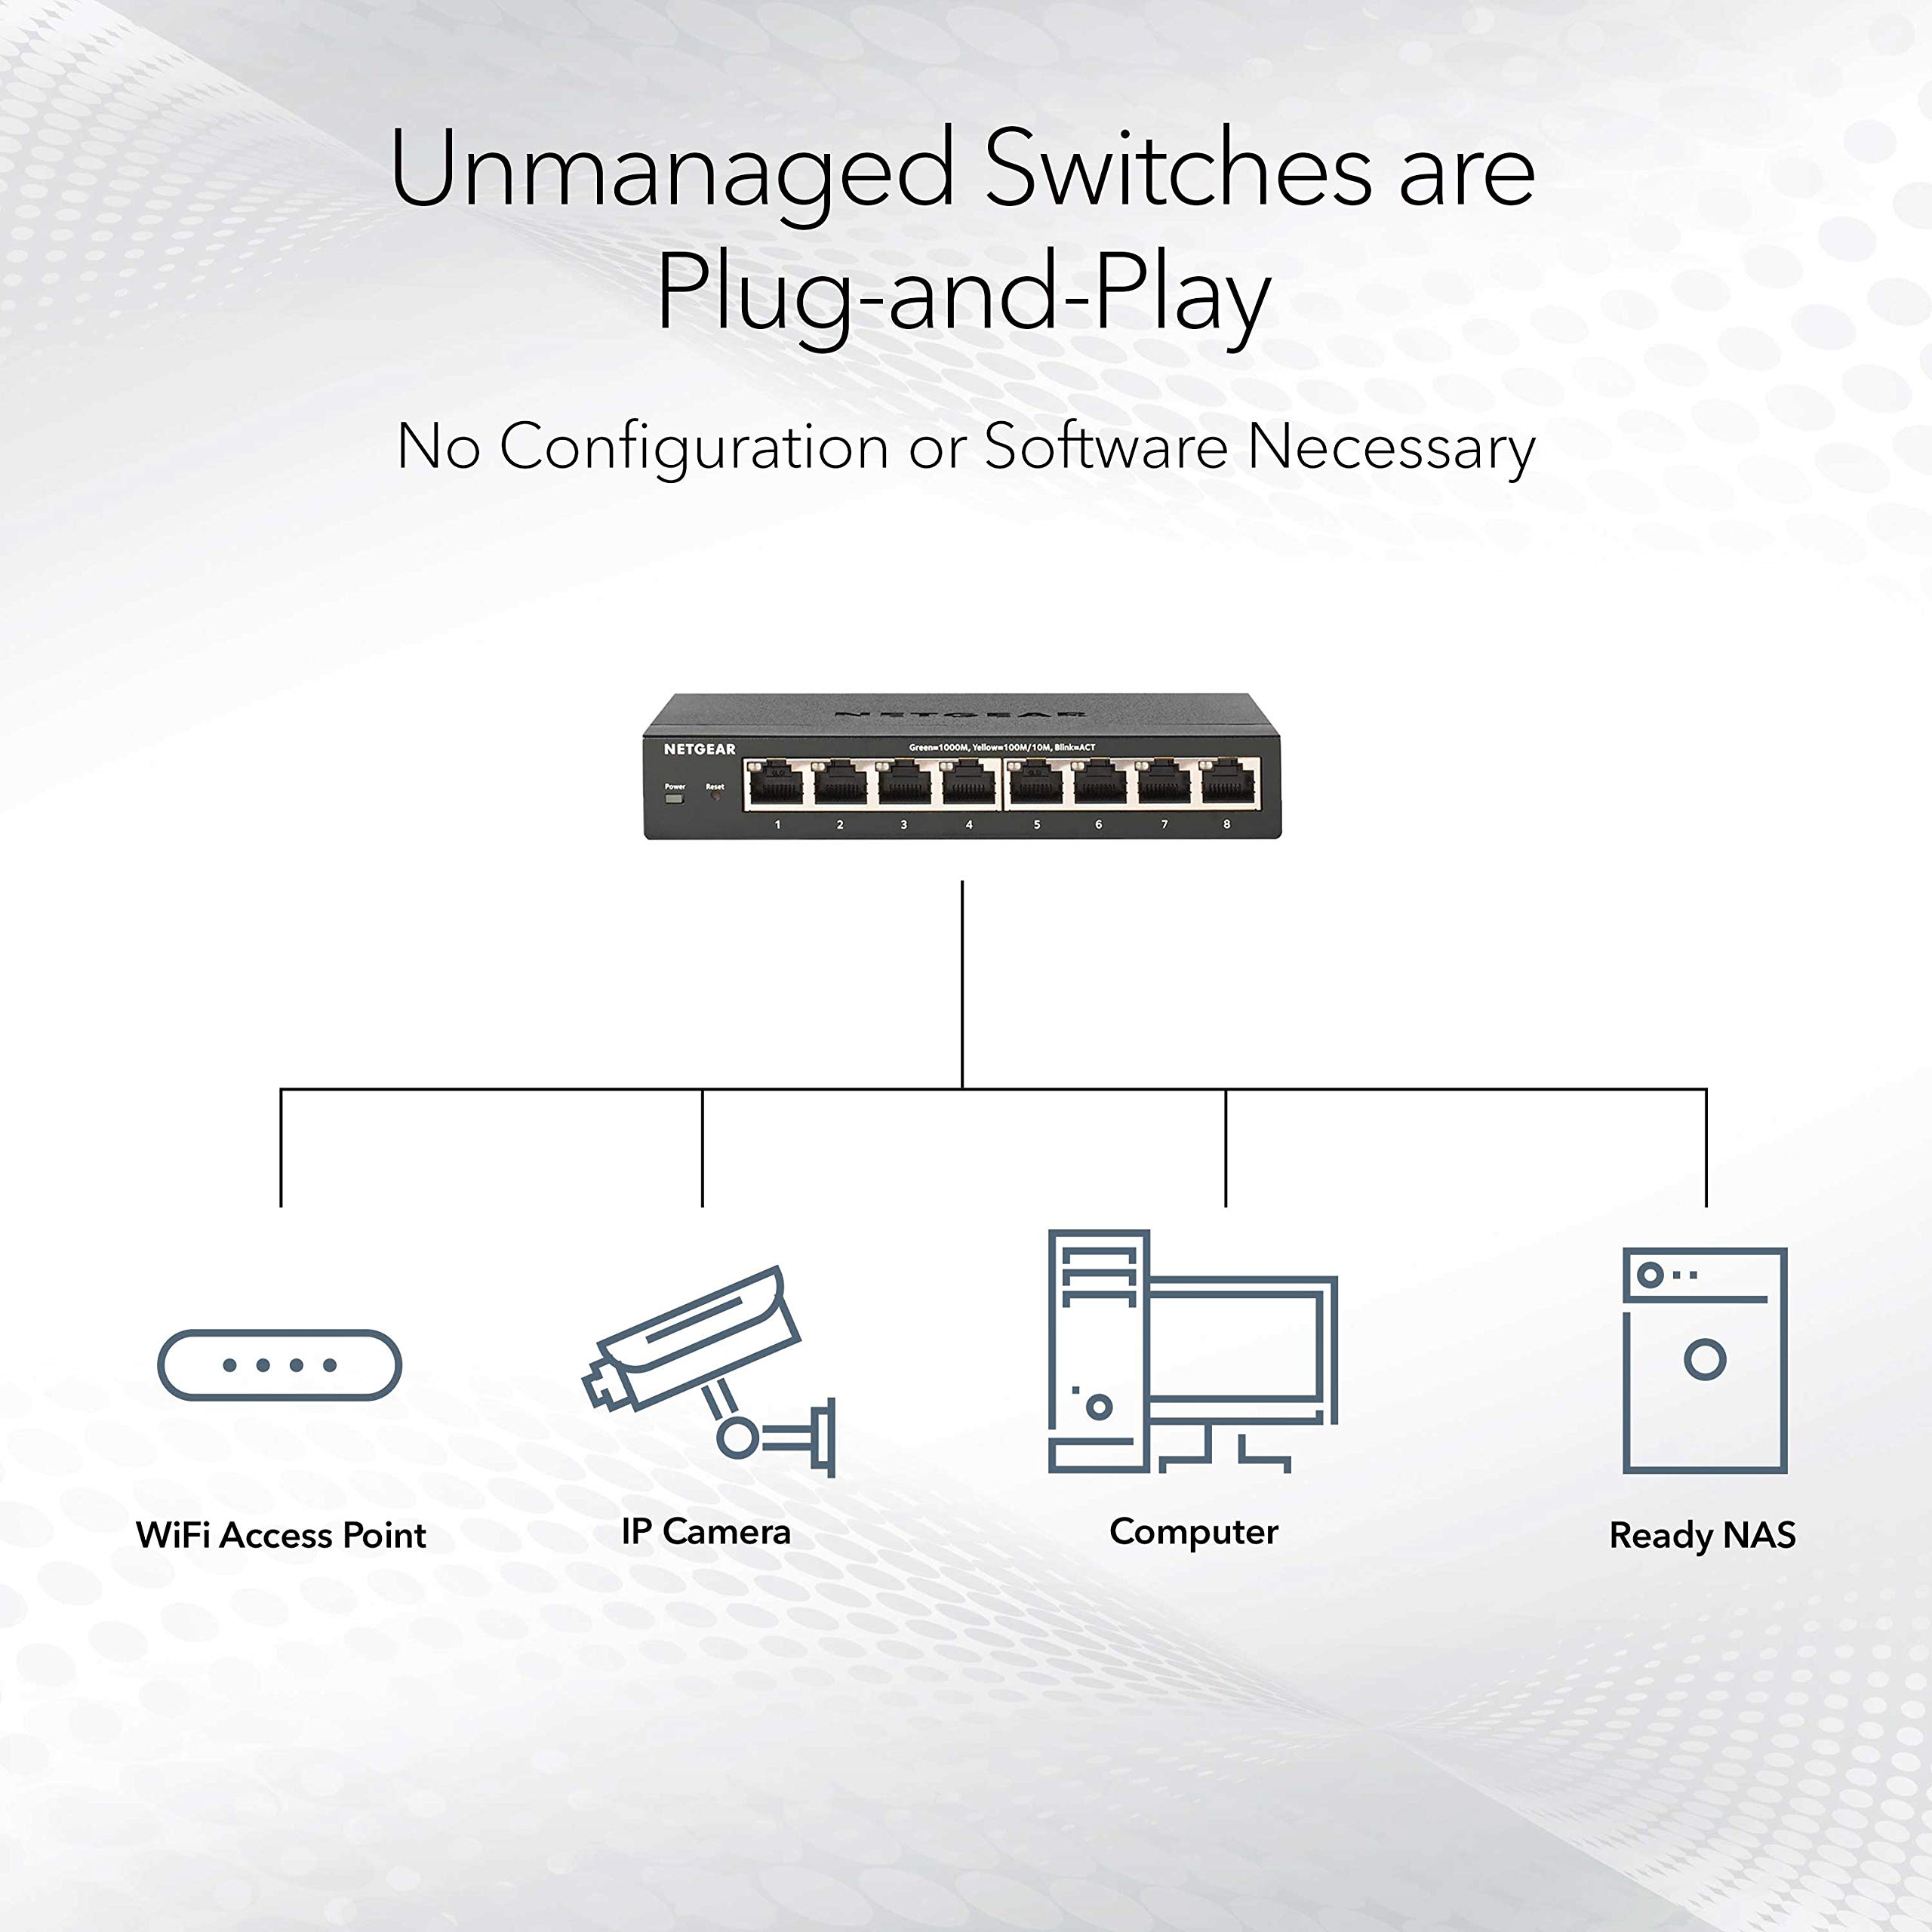 NETGEAR 24-Port Gigabit Ethernet Unmanaged Switch (GS324) - Desktop, Wall, or Rackmount, Silent Operation